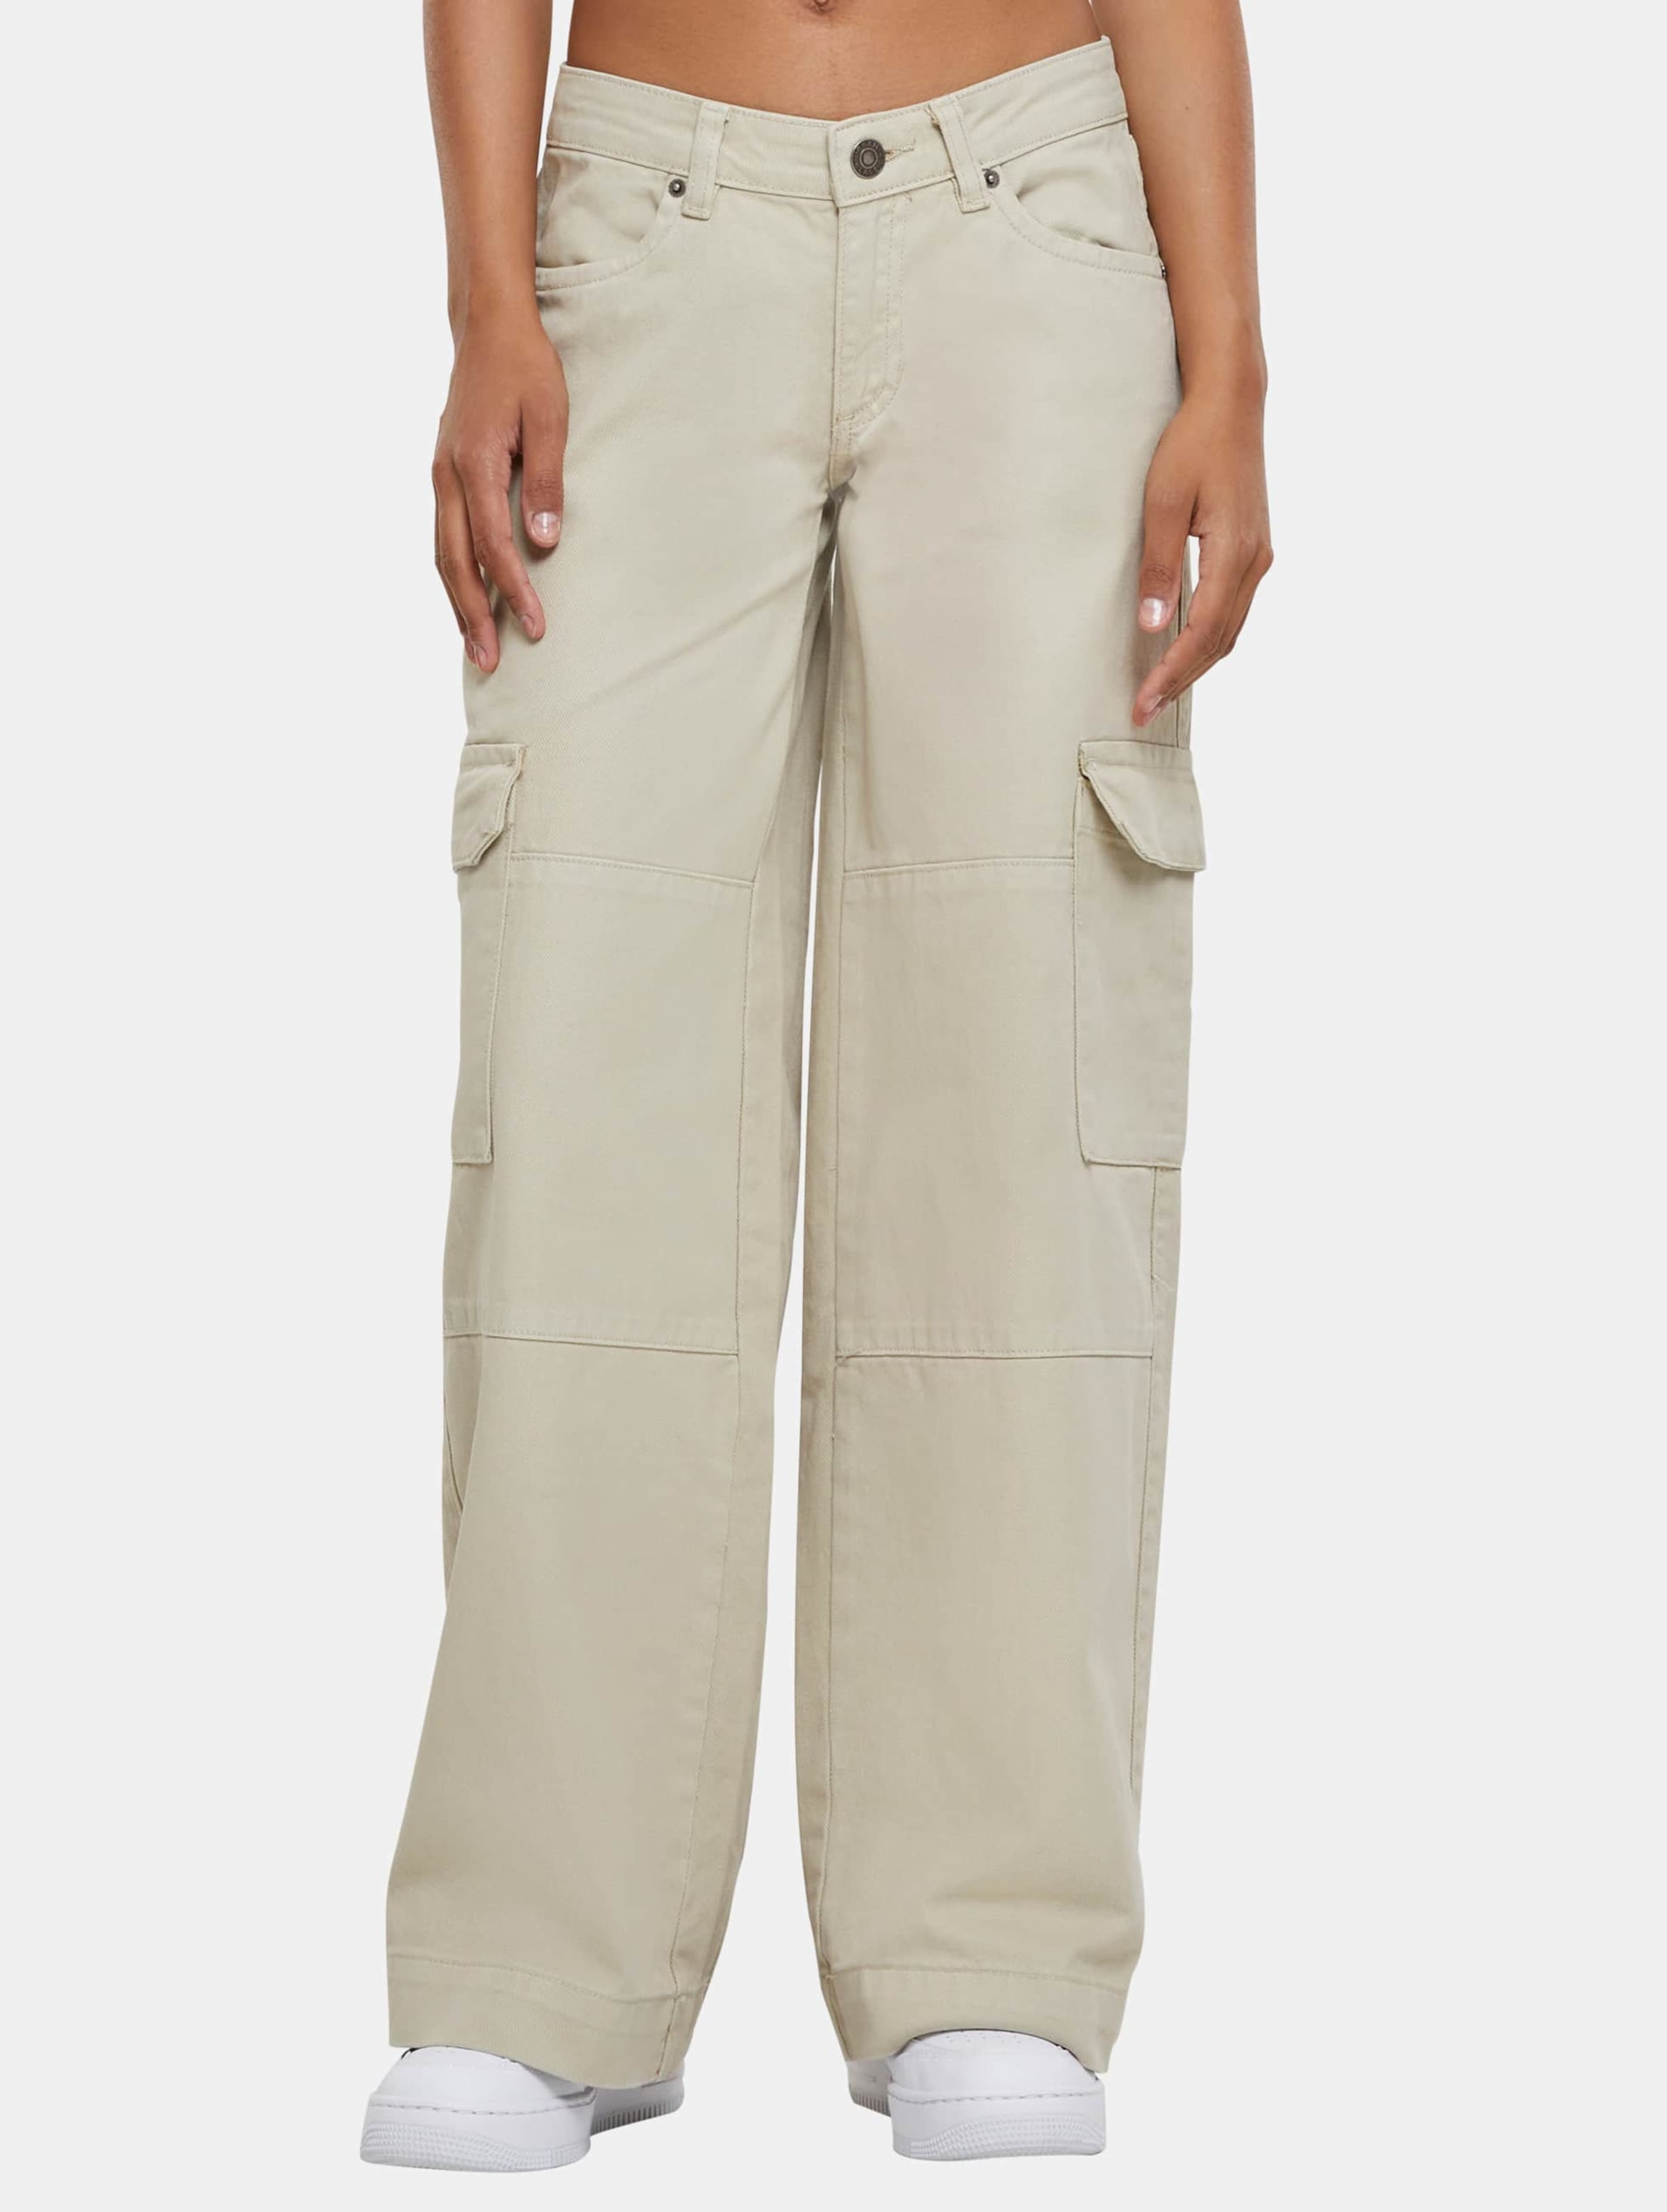 Urban Classics - Low Waist Denim Cargo trousers - Taille, 30 inch - Gebroken wit